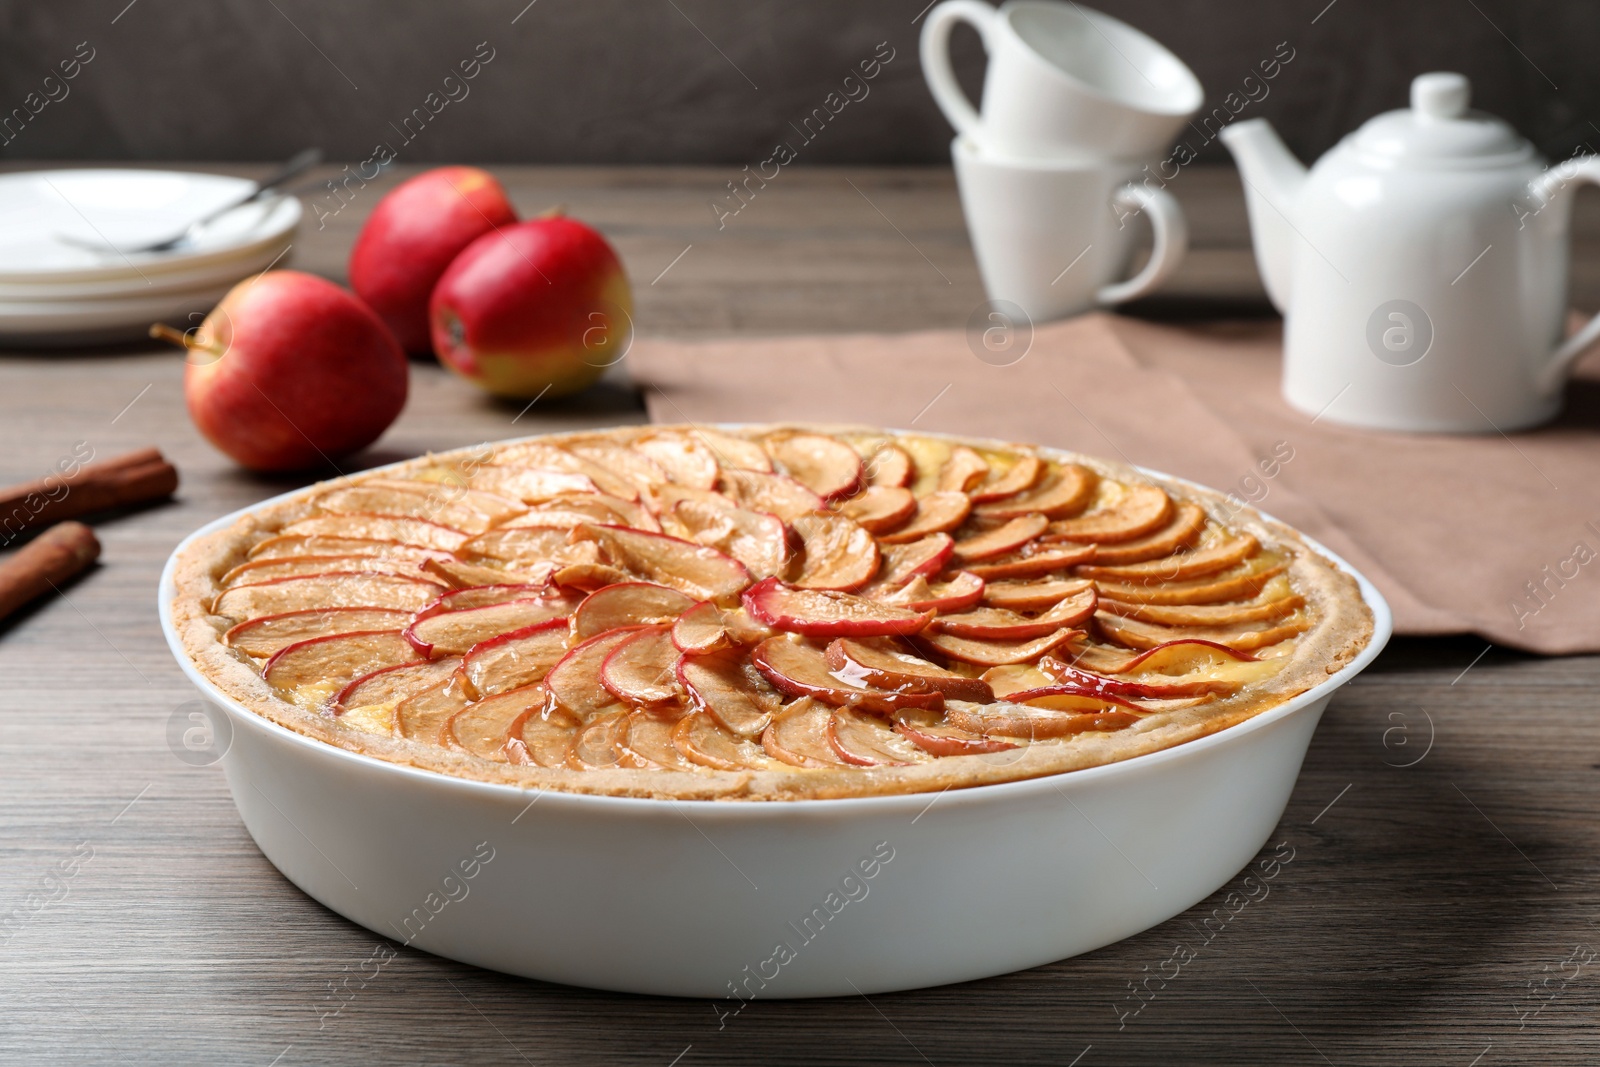 Photo of Tasty apple pie in baking dish on wooden table